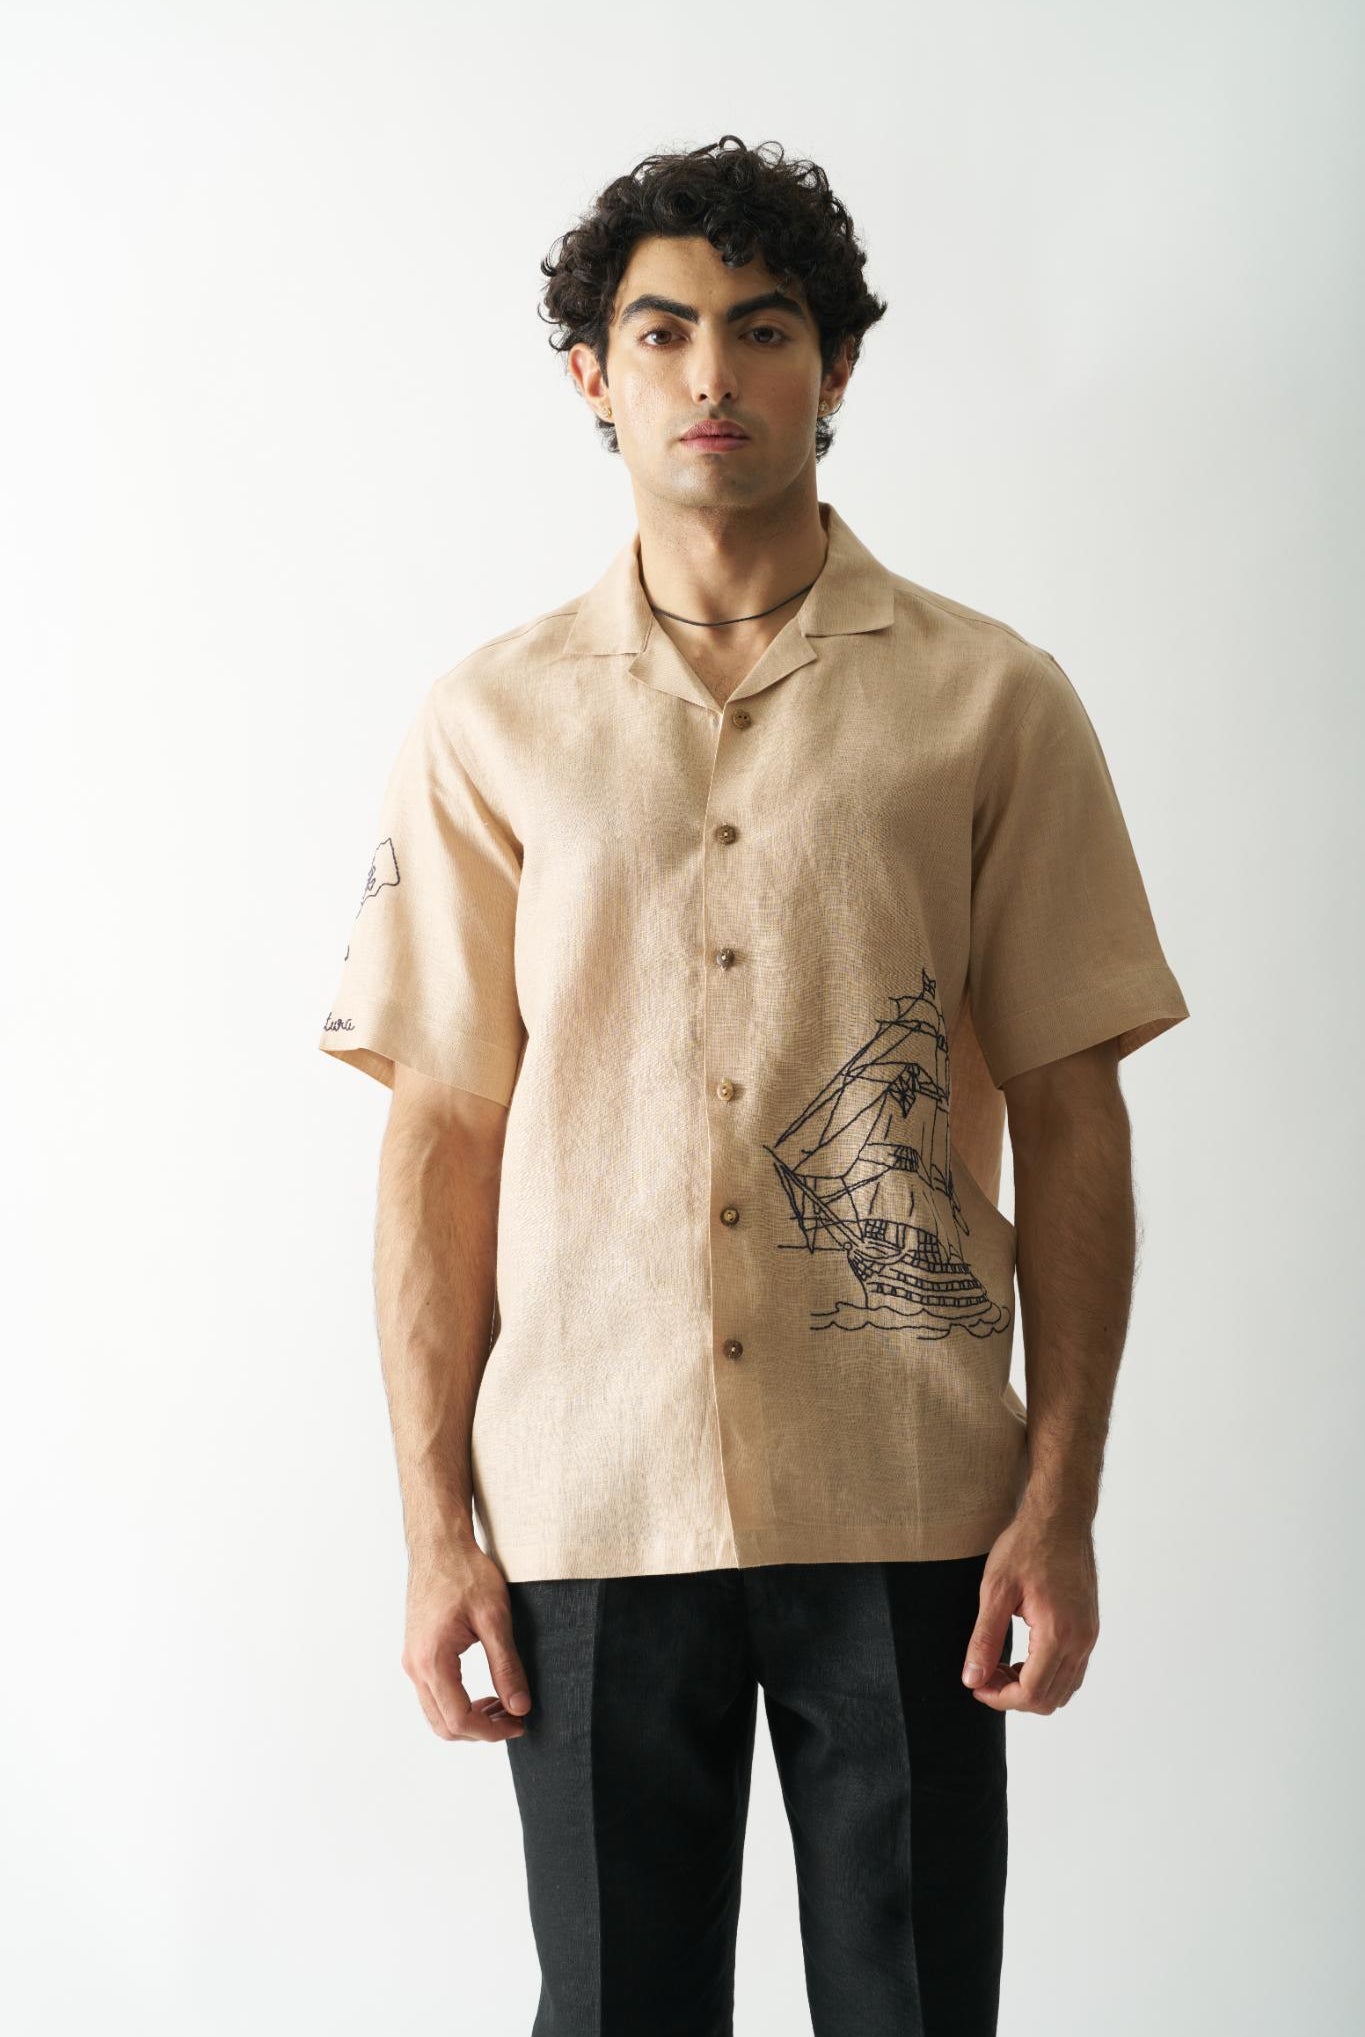 Pirate's Plunder - Mens Hand Embroidered Pure Linen Shirt - CiceroniShirtsCultura Studio